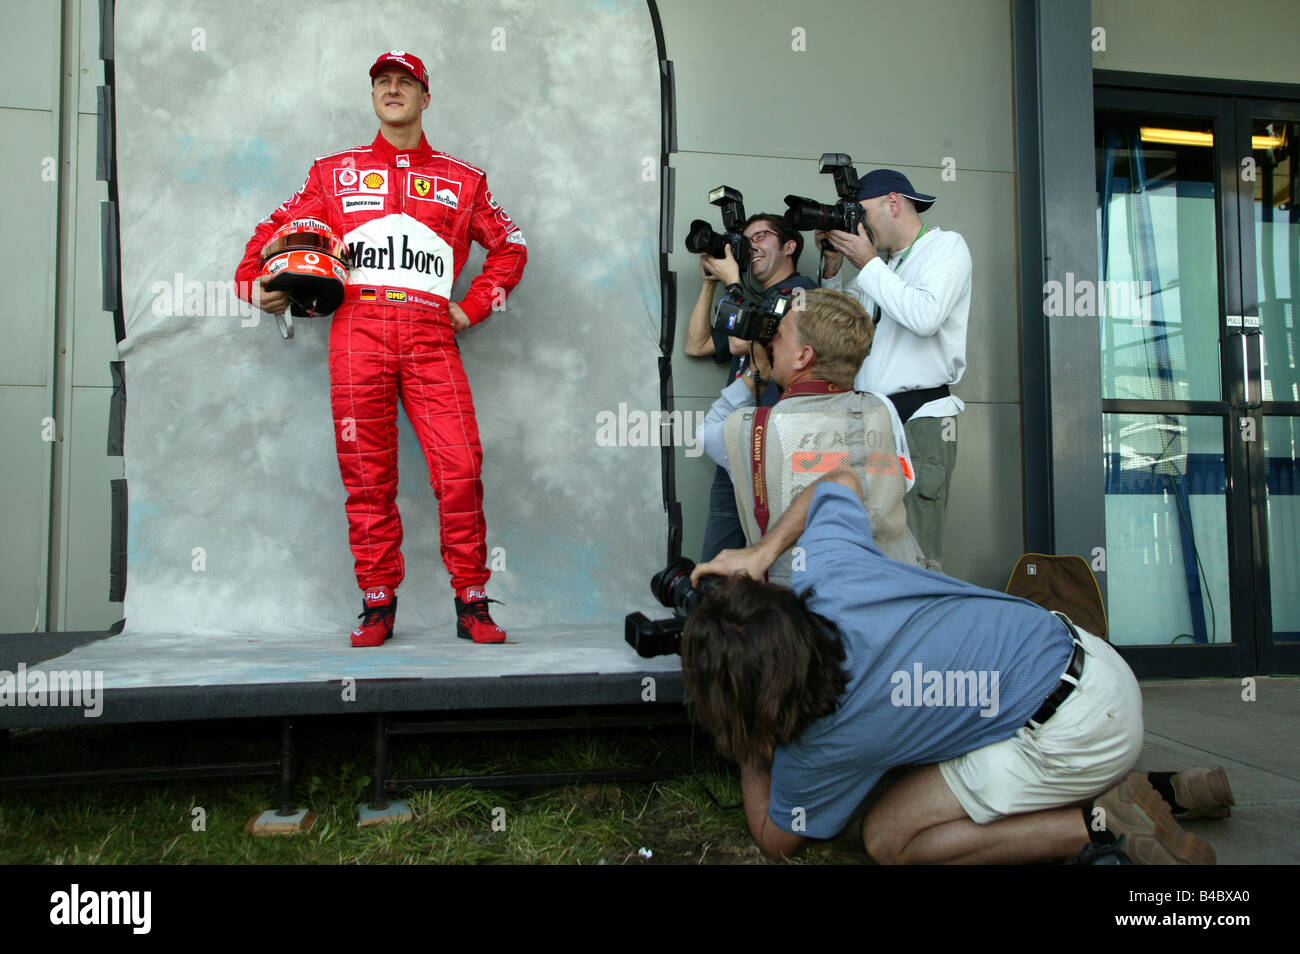 engine sport, Formel 1, Michael Schumacher, Portrait Stock Photo